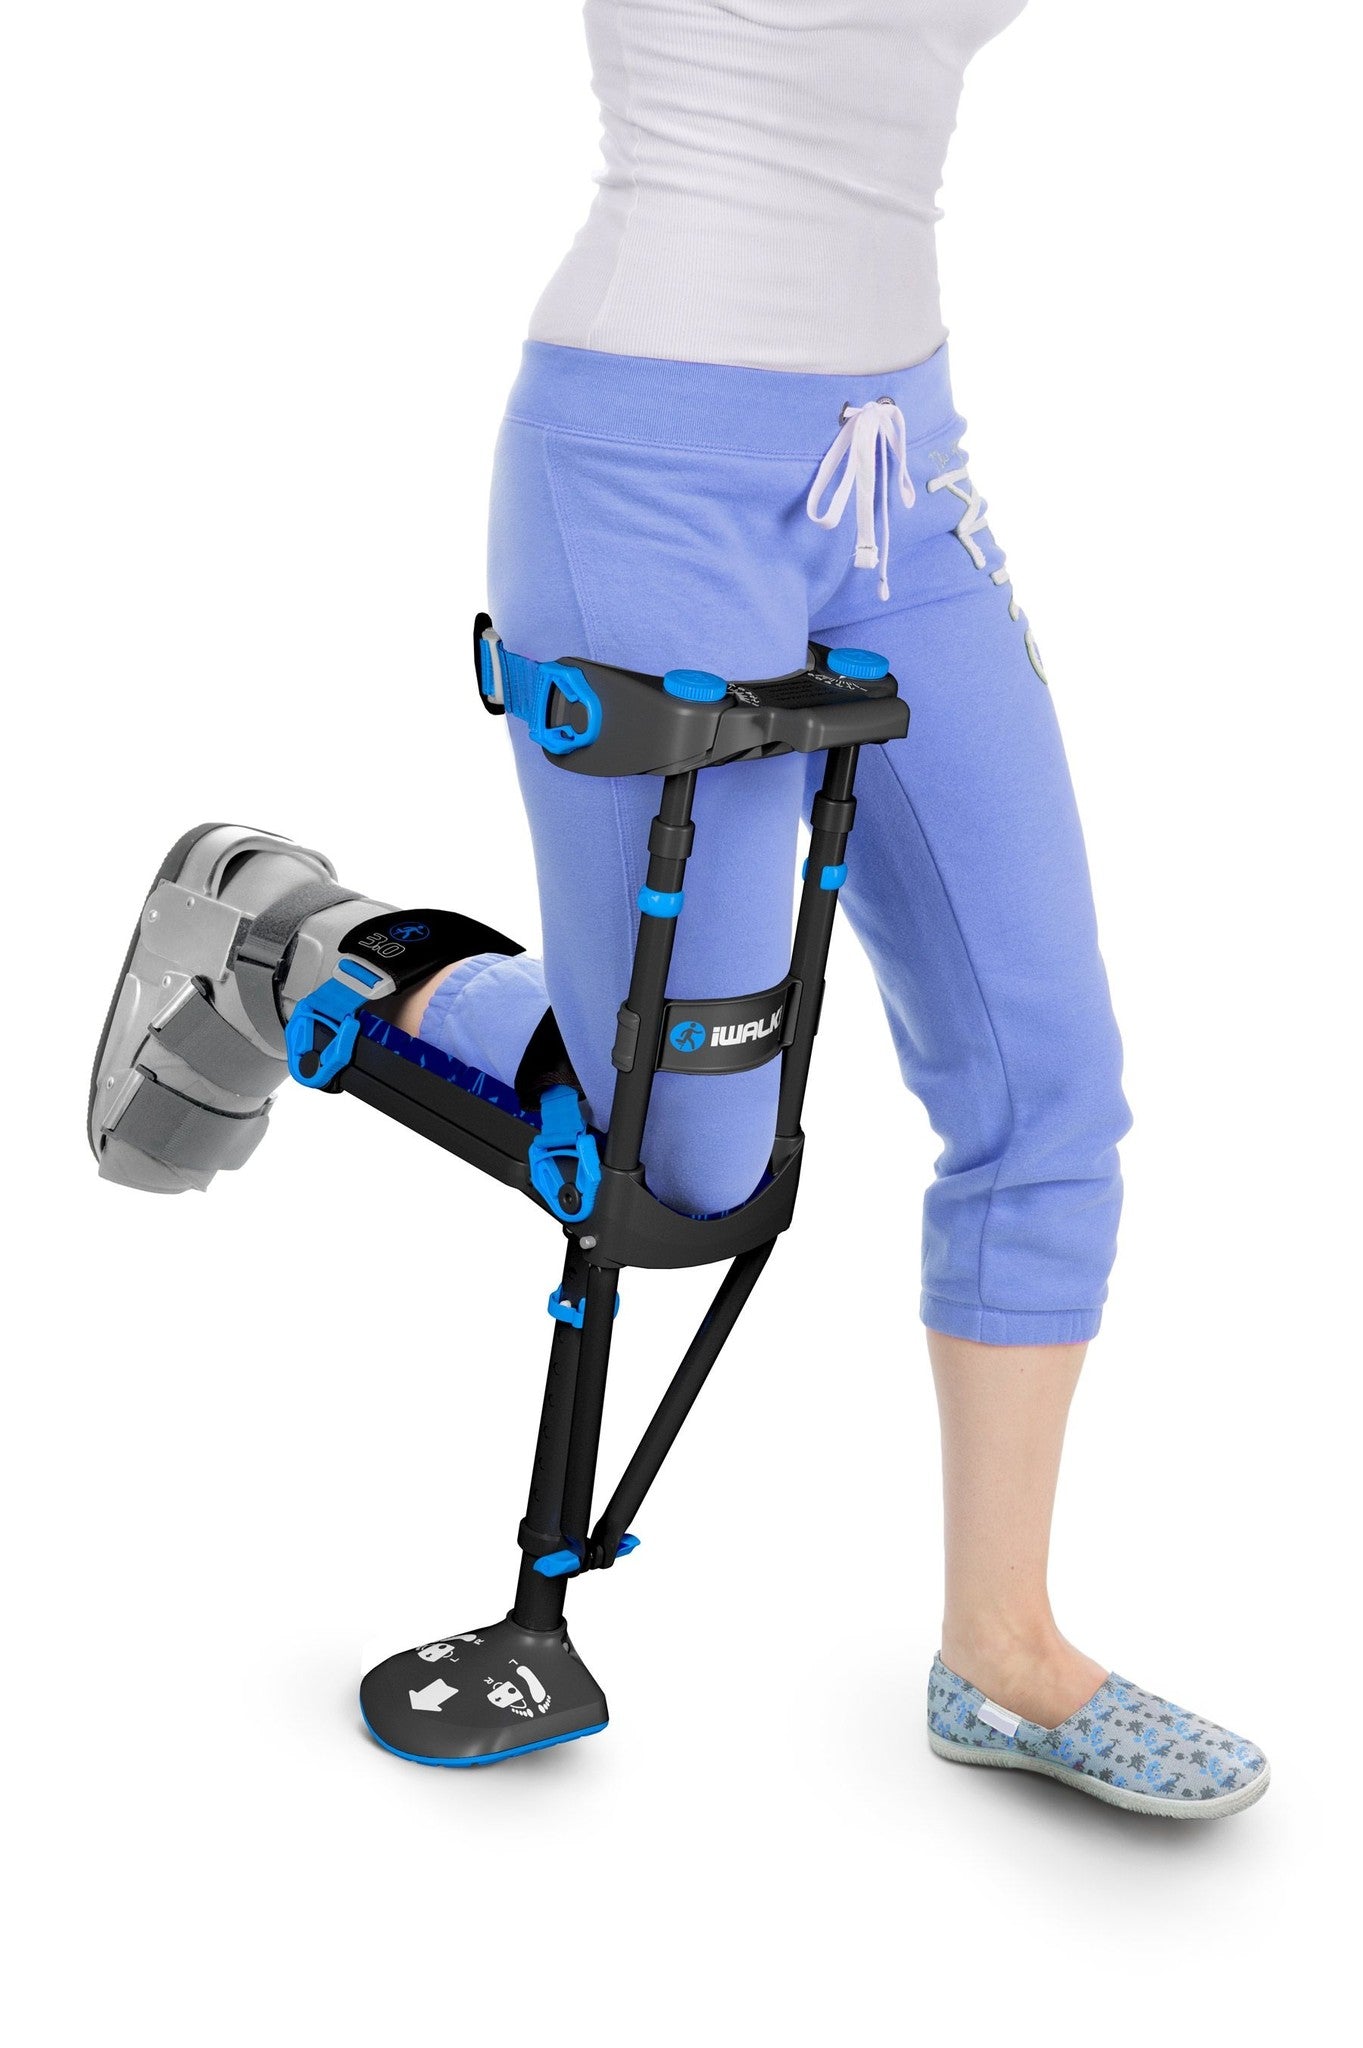 I-Walk Hands-Free Crutch 3.0